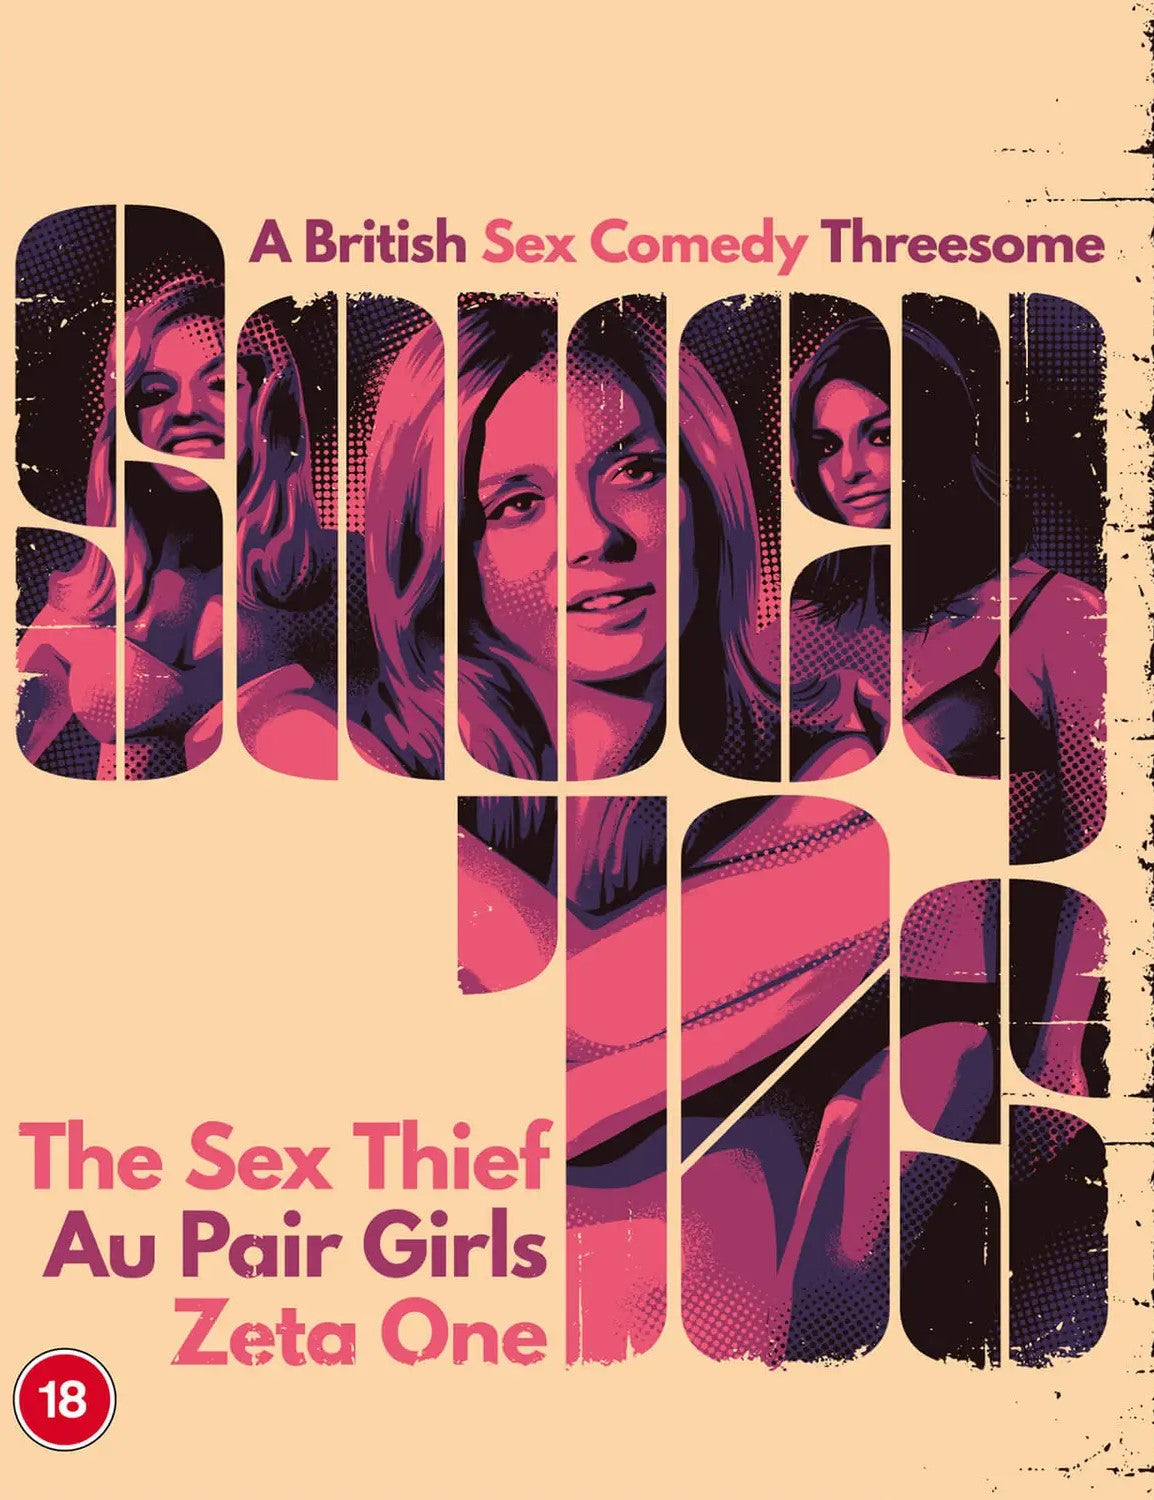 SAUCY 70'S: A BRITISH SEX COMEDY THREESOME (REGION B IMPORT - LIMITED EDITION) BLU-RAY